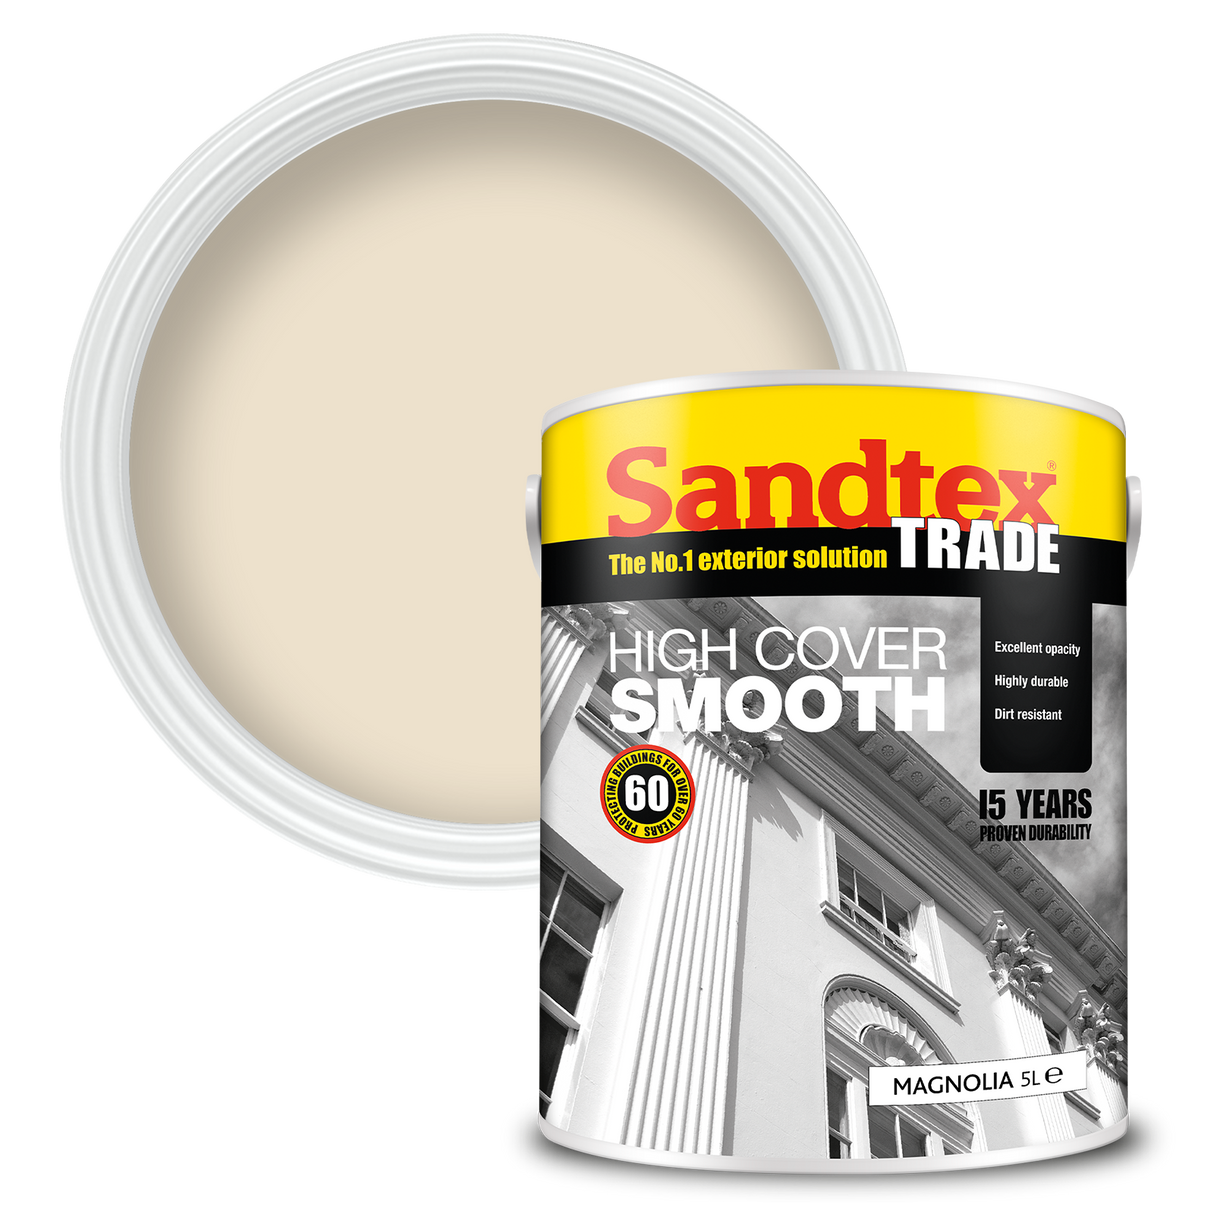 Sandtex-Trade-High-Cover-Smooth-Magnolia-5L